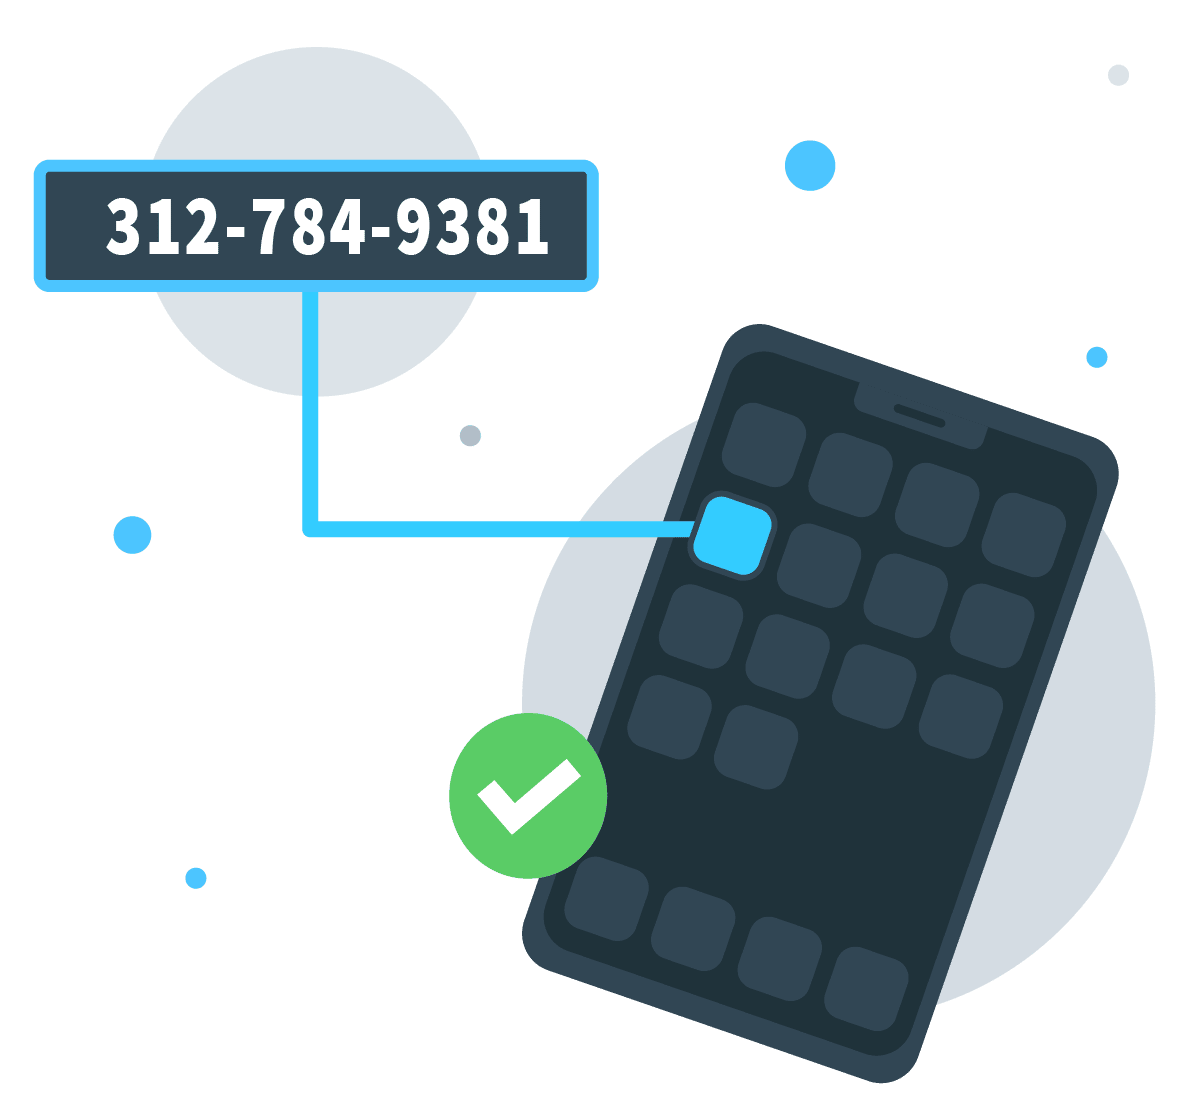 Custom Phone Number App